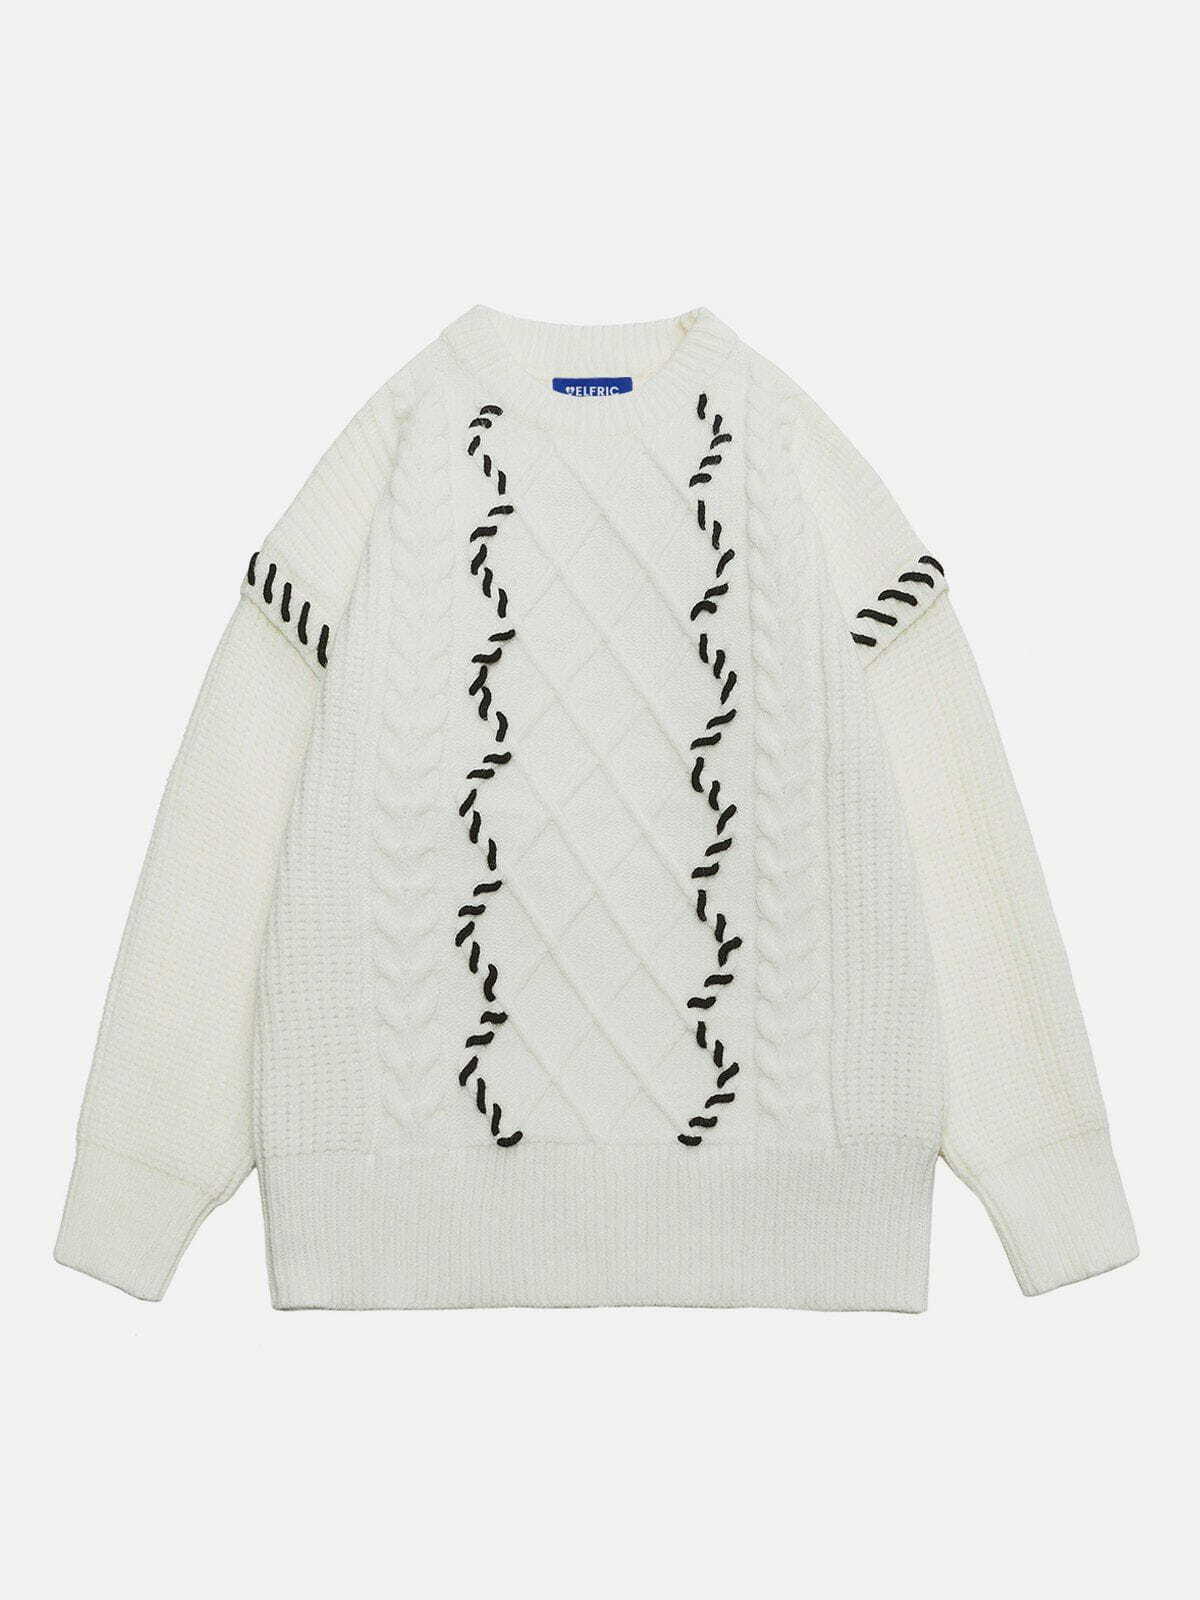 vibrant color block sweater   edgy & trendy streetwear 2880